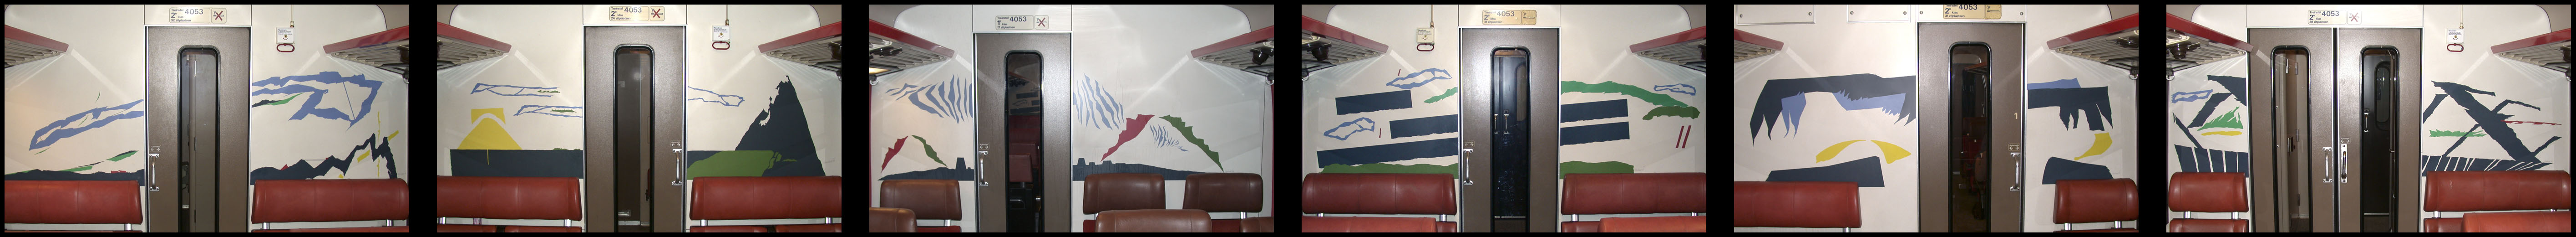 Train compartment partition paintings (1986/87) - large version